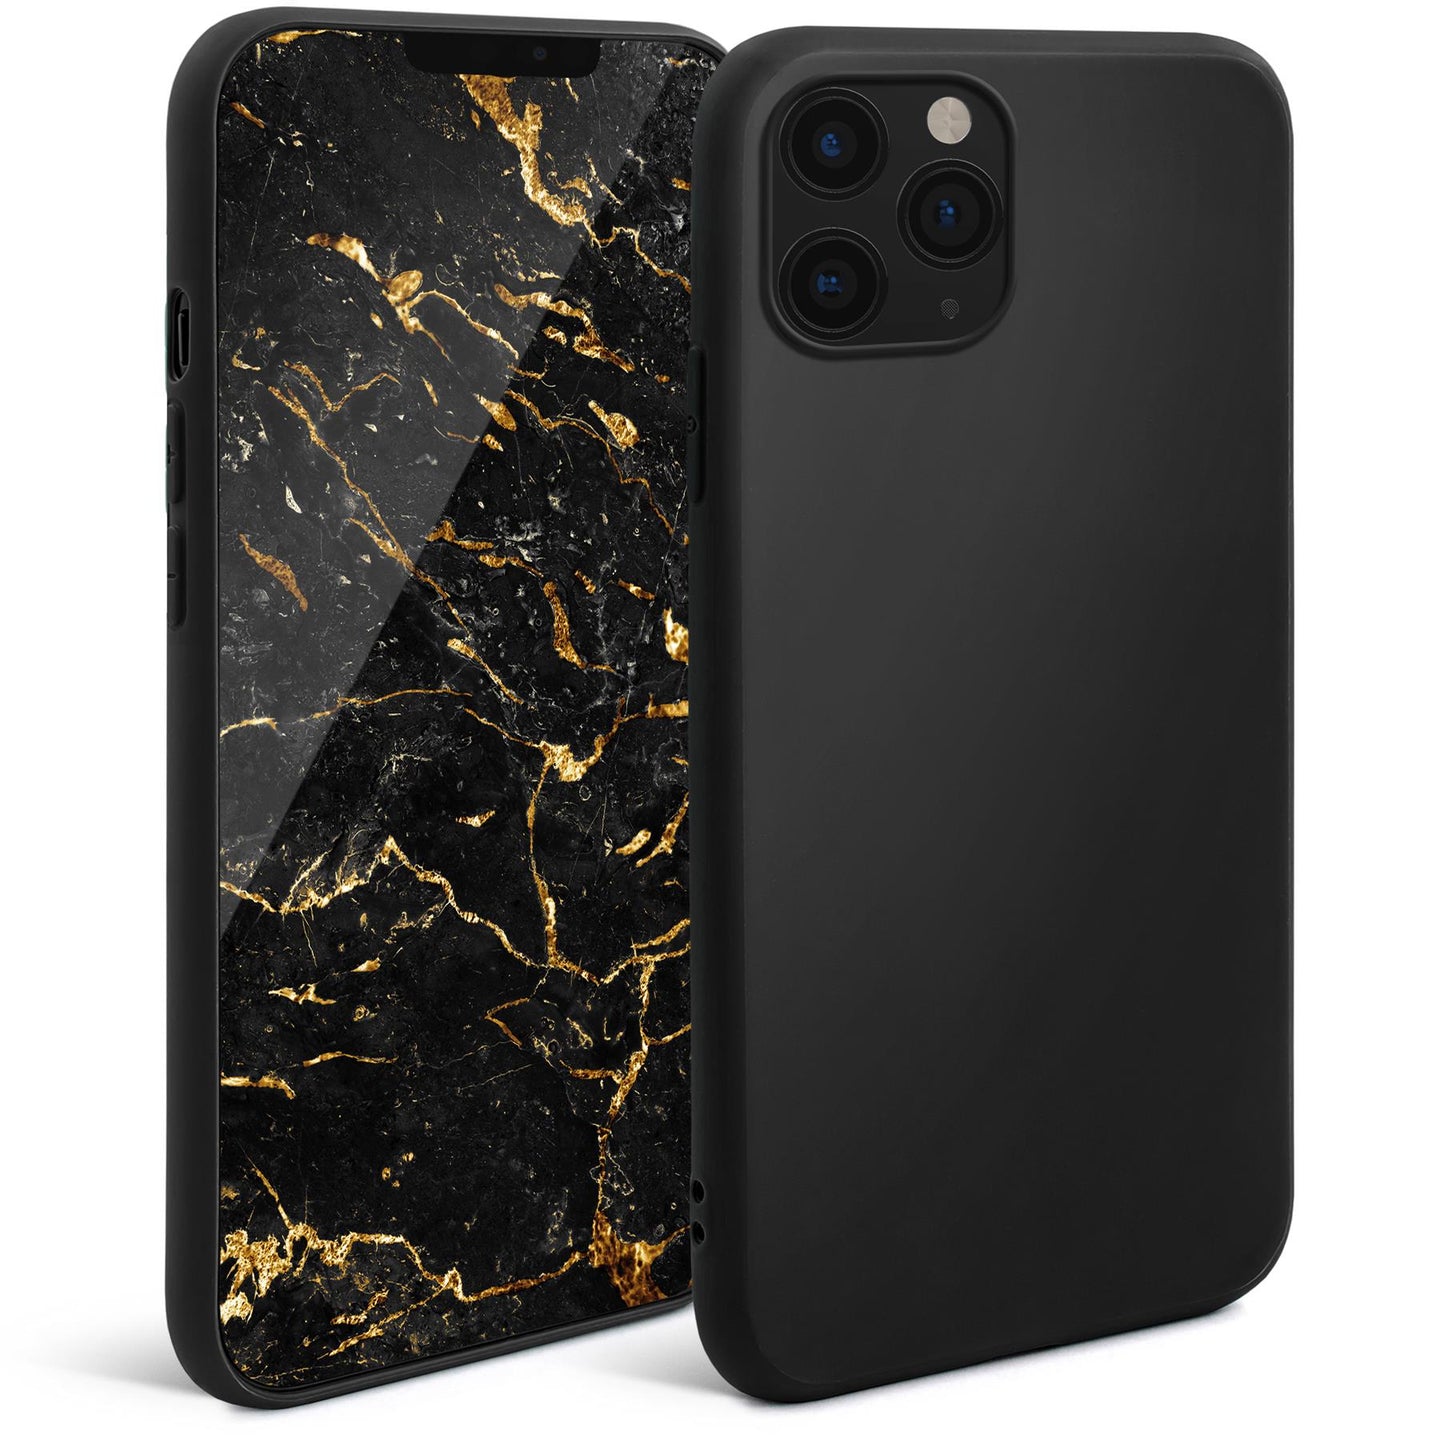 Moozy Minimalist Series Silicone Case for iPhone 11 Pro, Black - Matte Finish Slim Soft TPU Cover